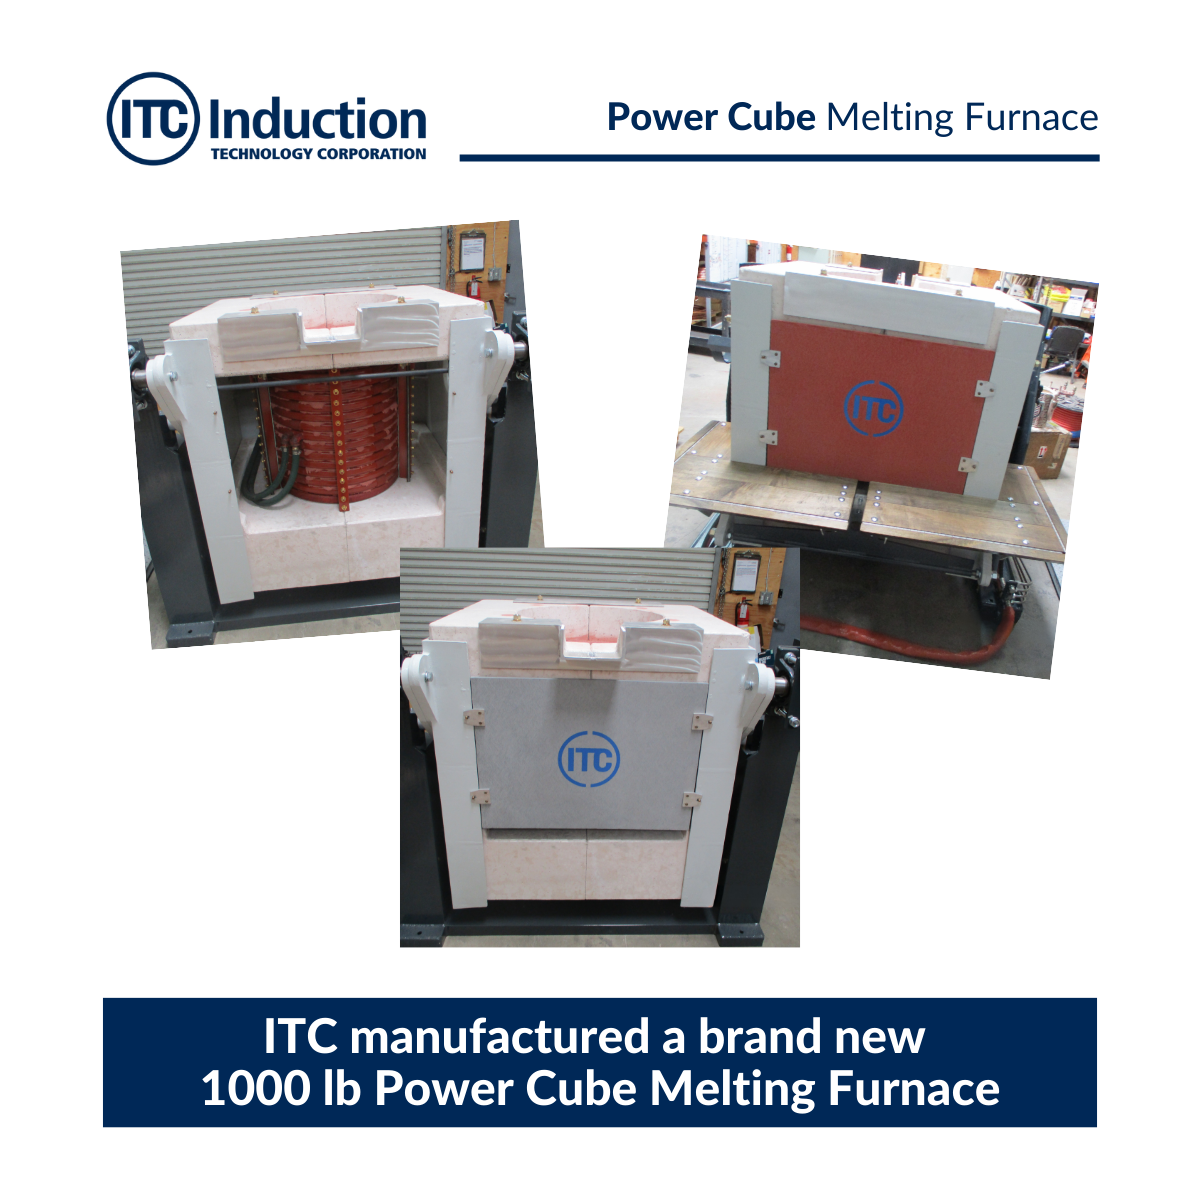 Power Cube Melting Furnace